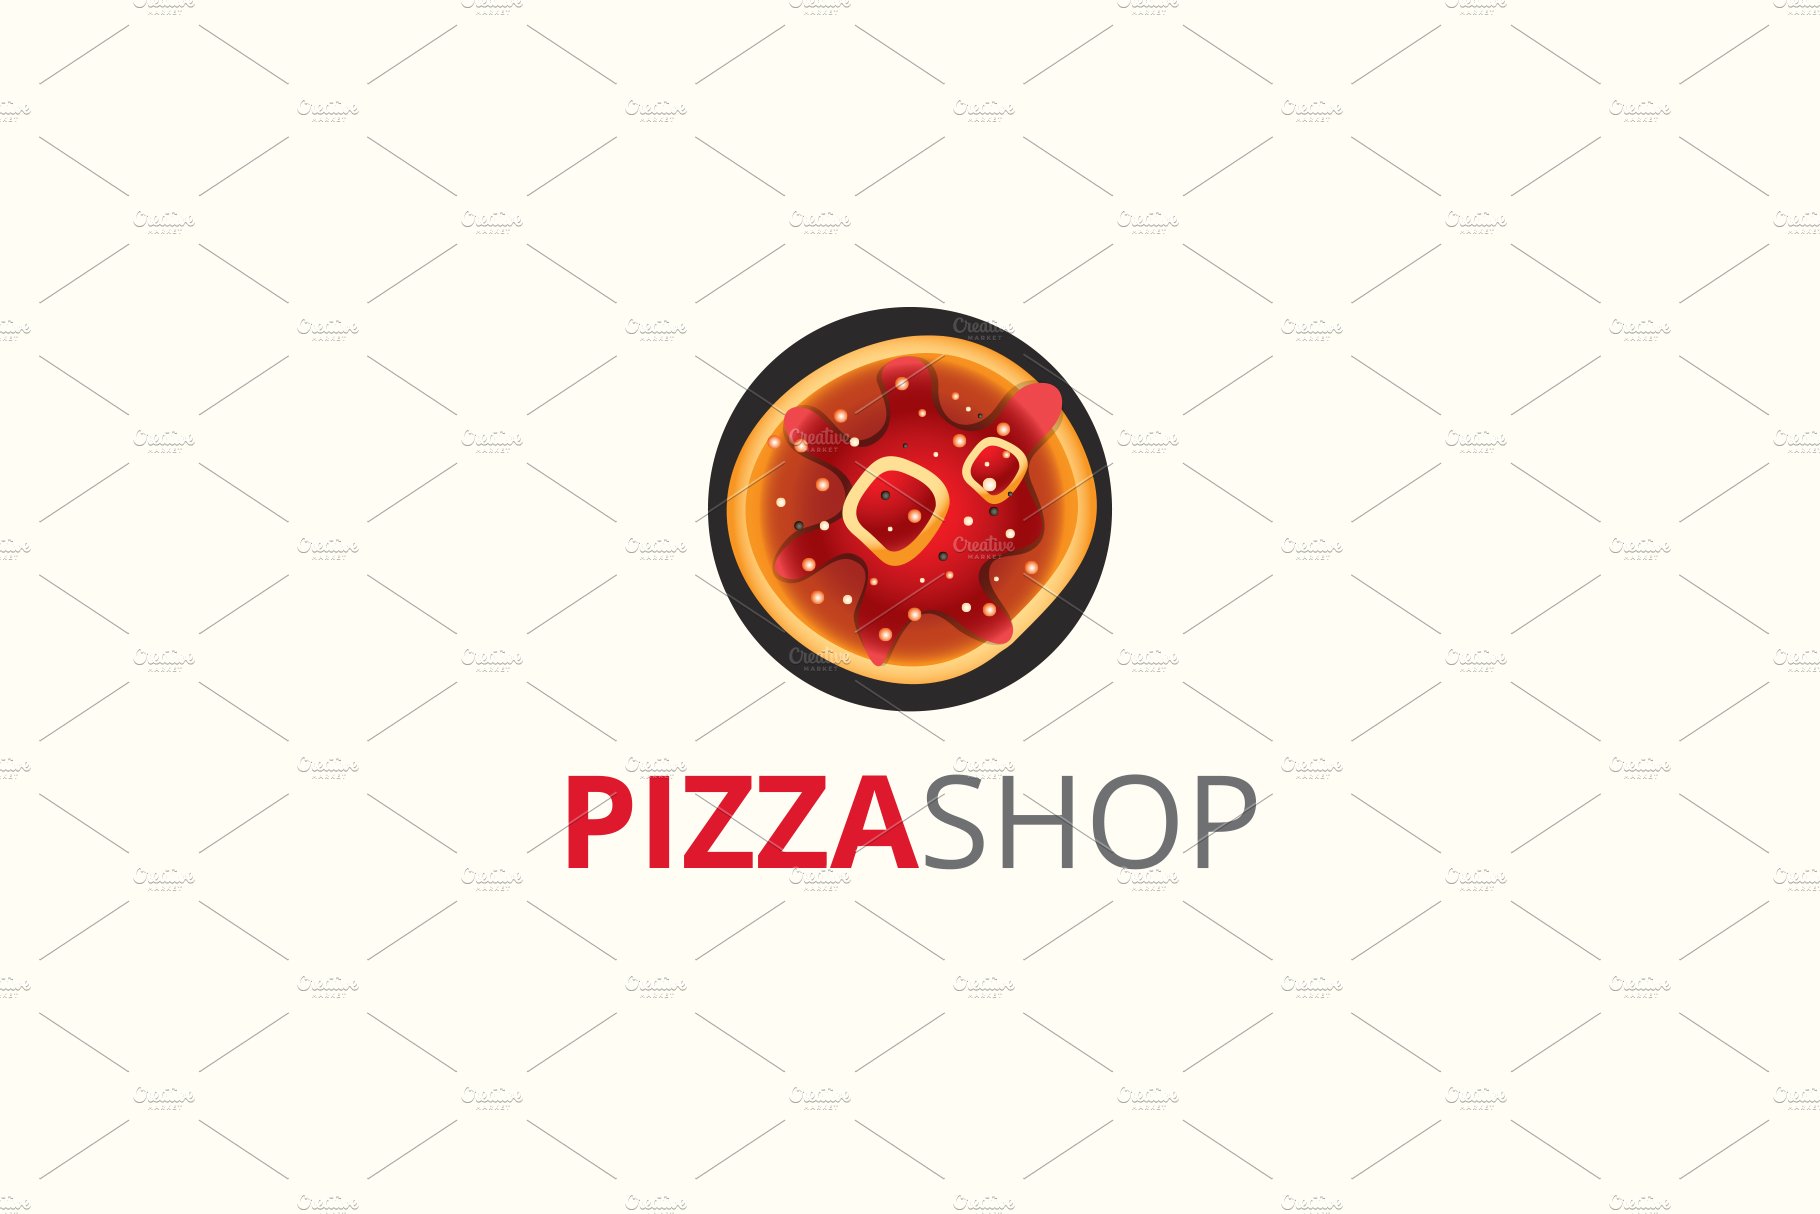 Pizza shop Logo cover image.